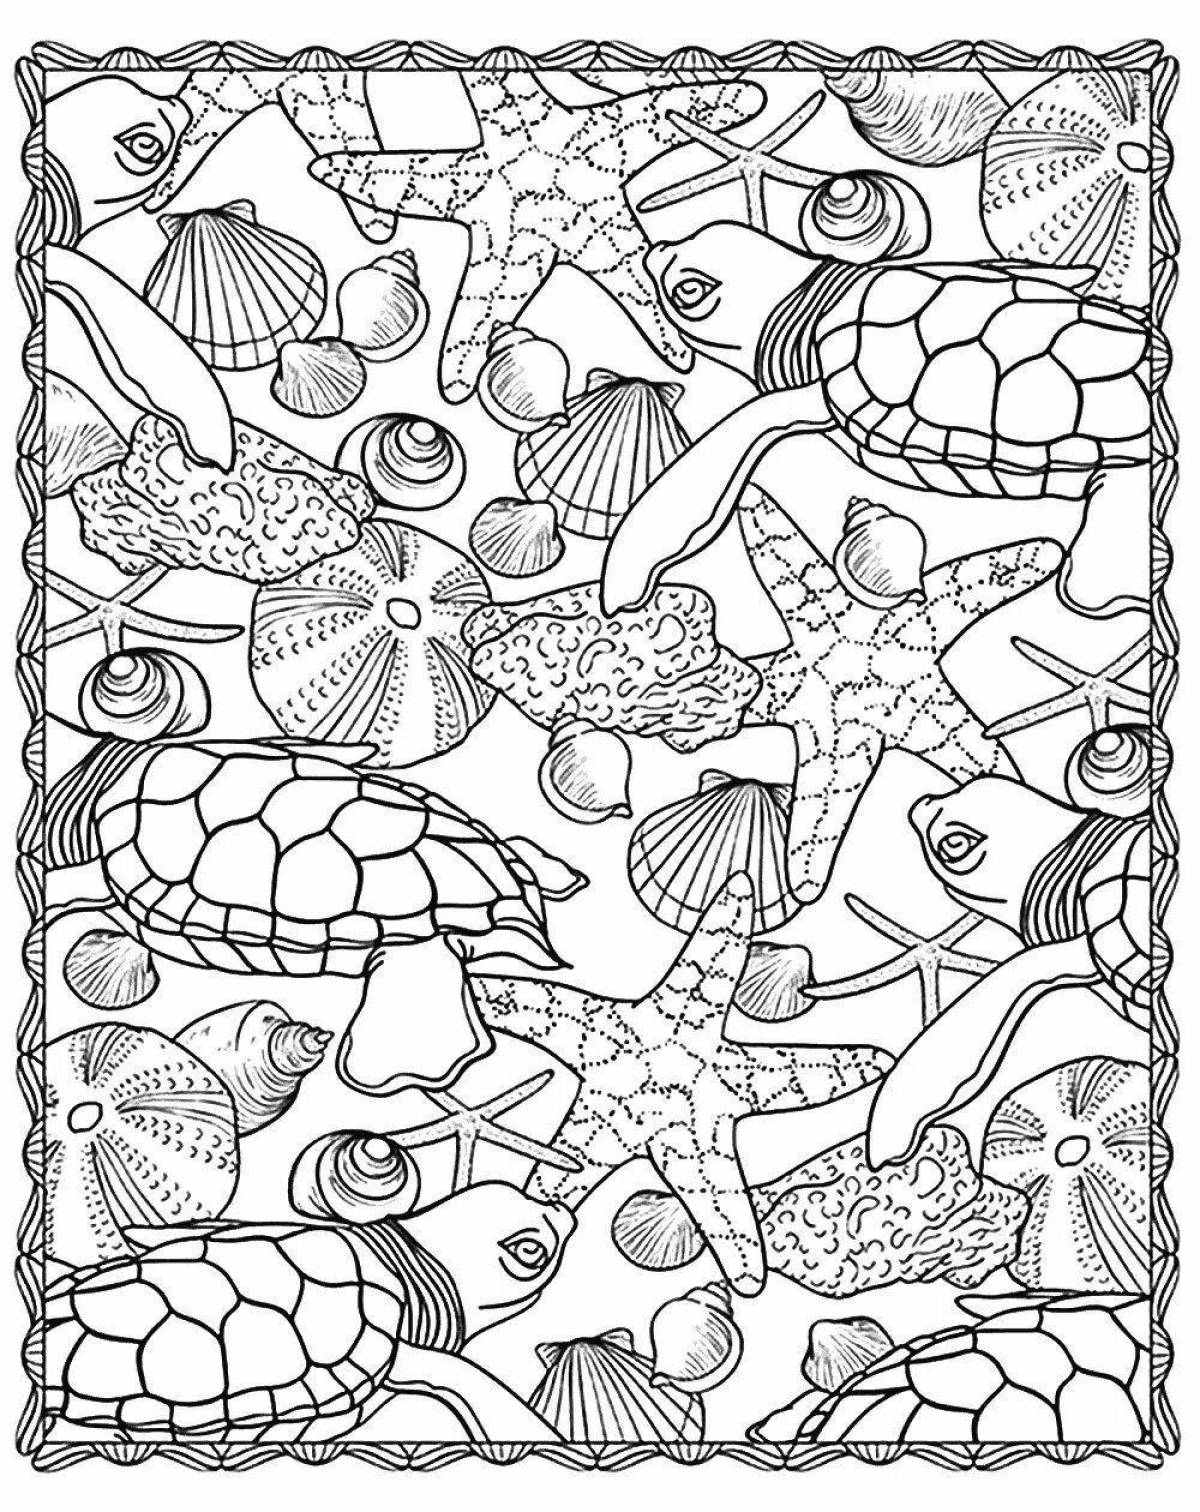 Great anti-stress marine life coloring book